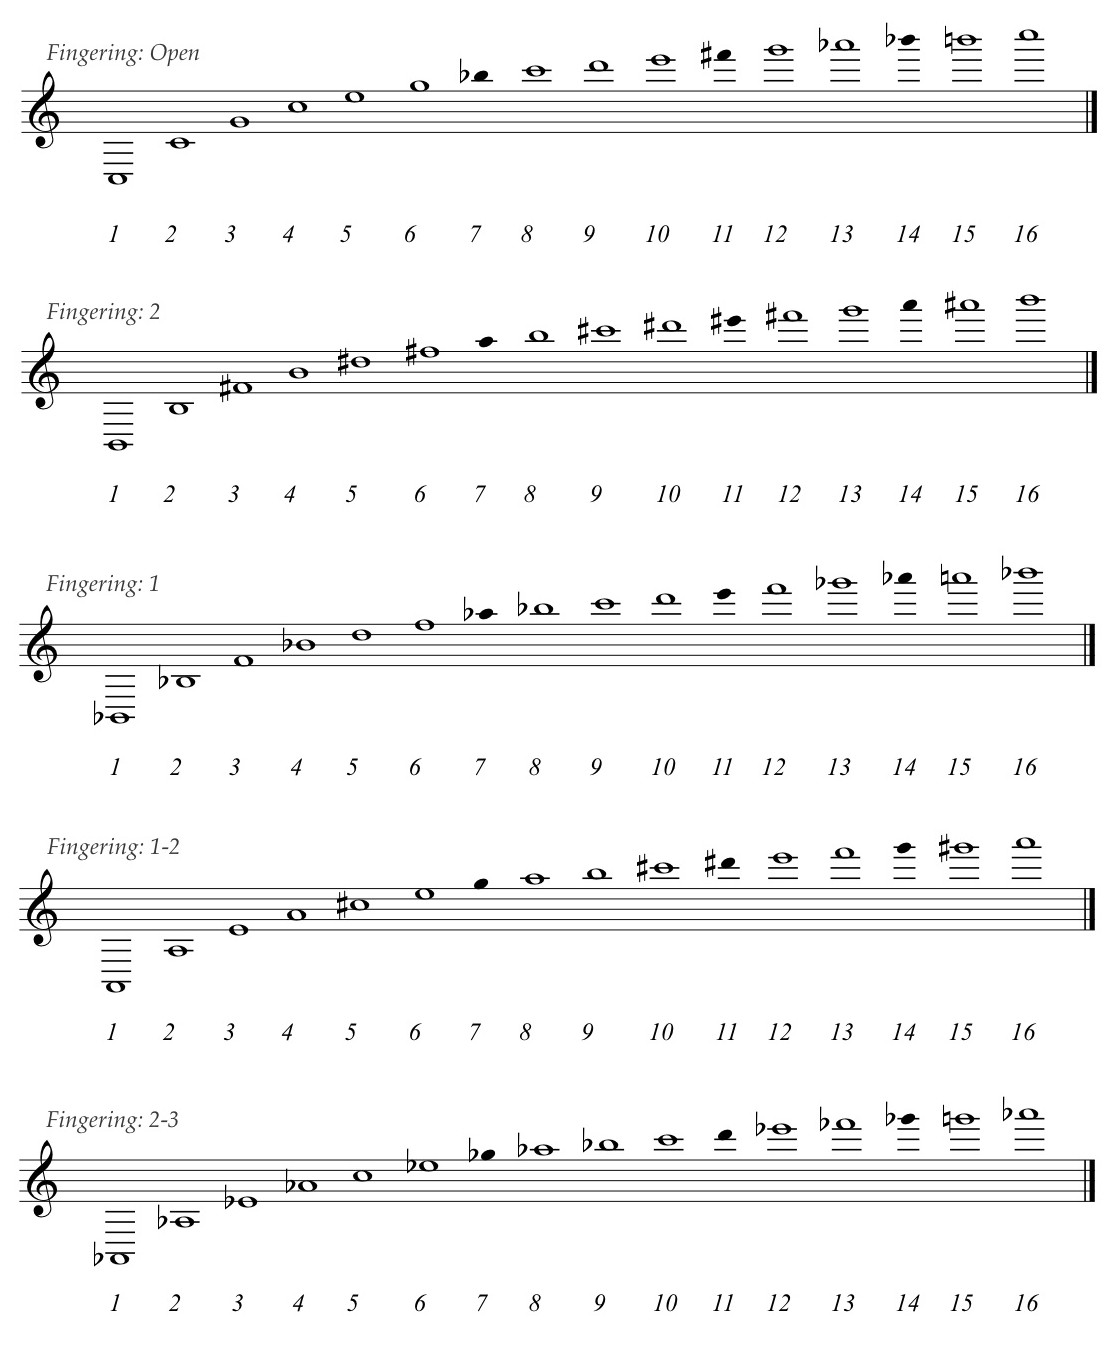 Overtone Series Chart